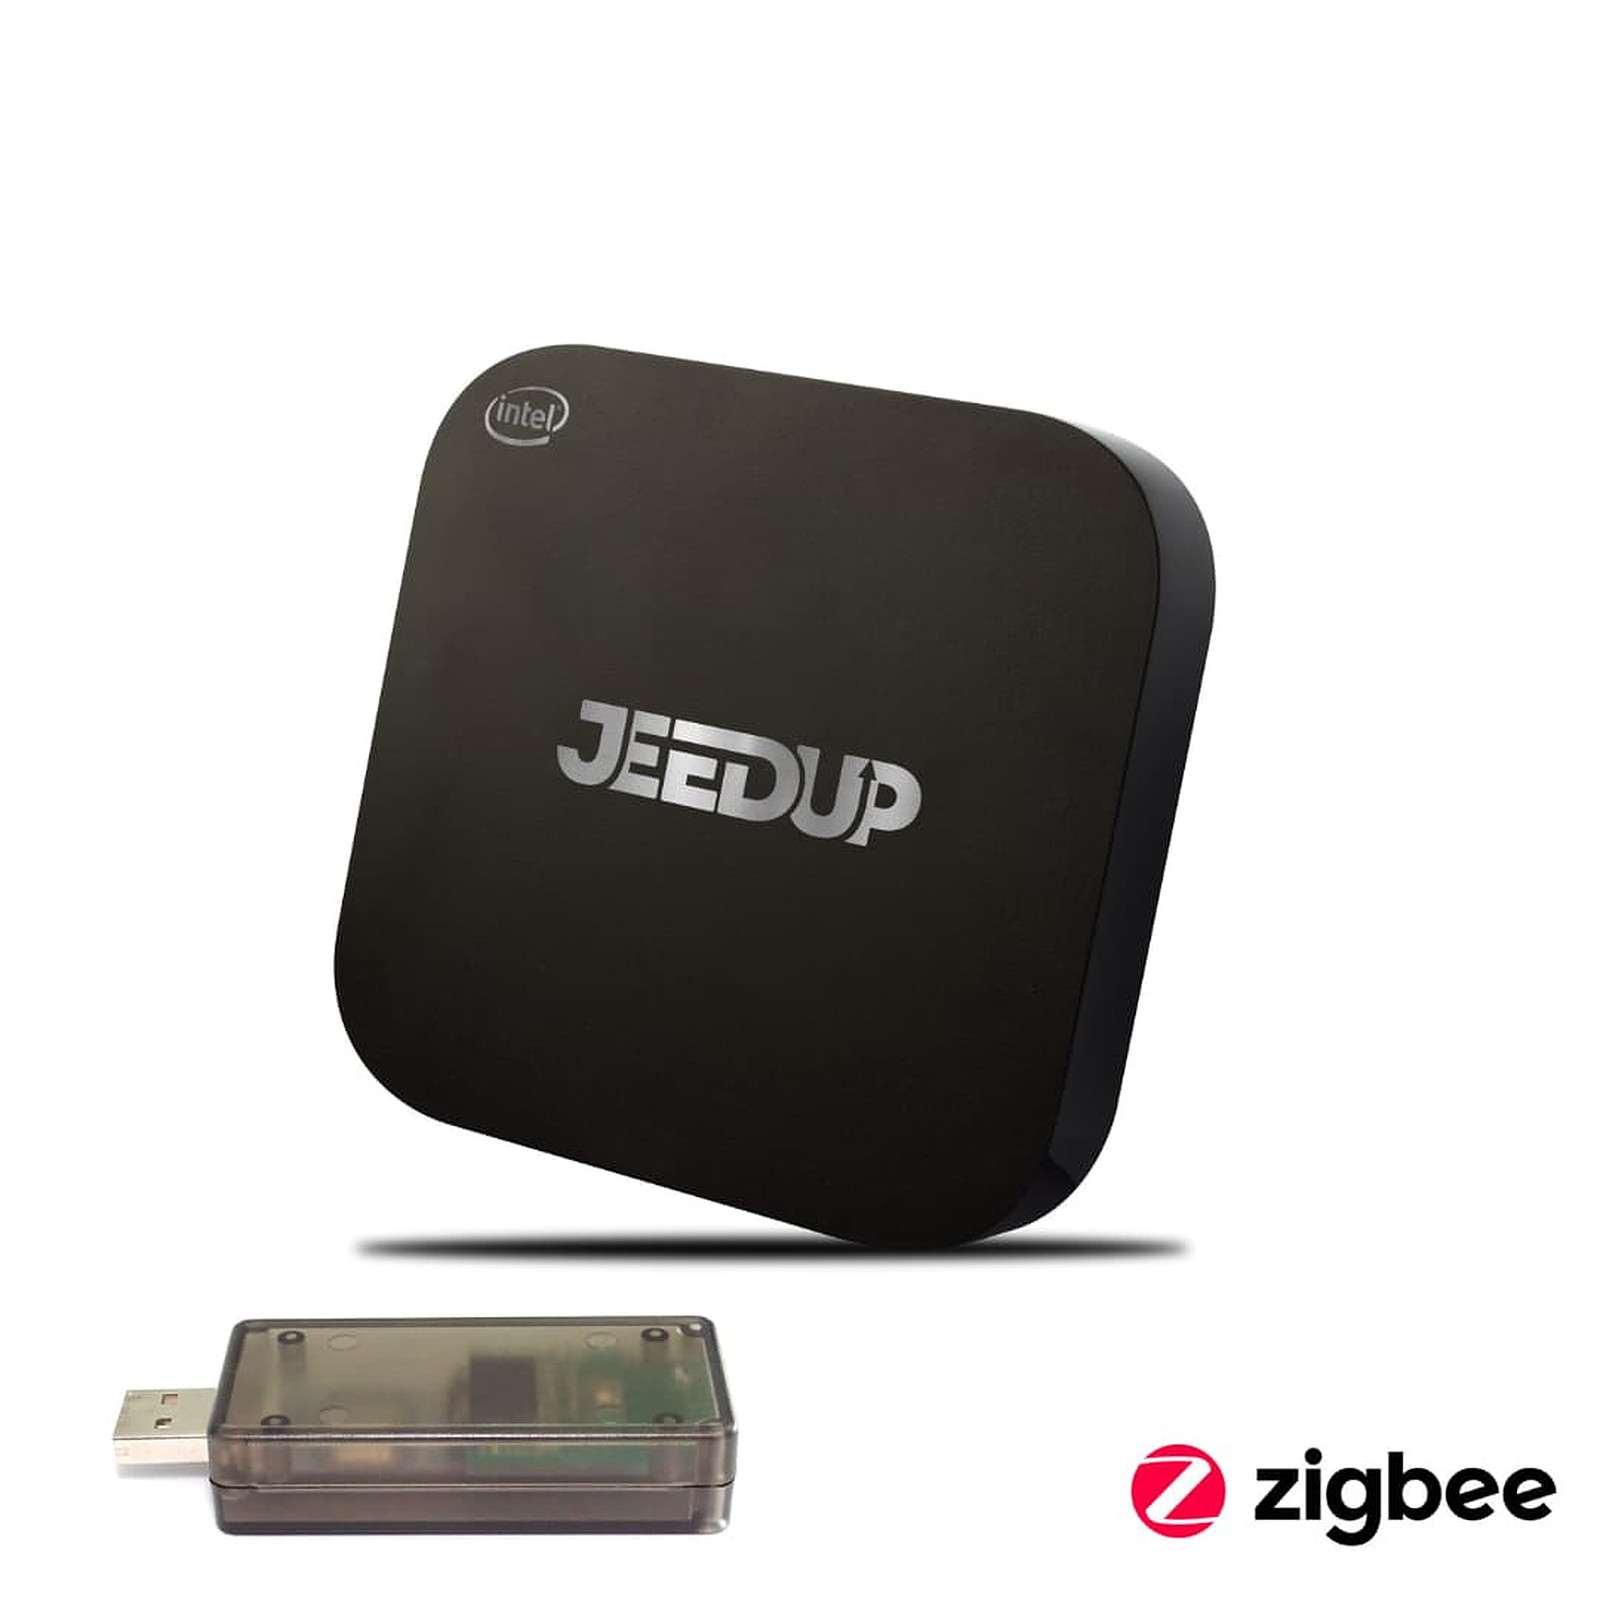 Wizelec Box Domotique Jeedup Version Zigbee Avec Zigate (powered By Jeedom) JEEDUP_ZIGATE - Box domotique Wizelec